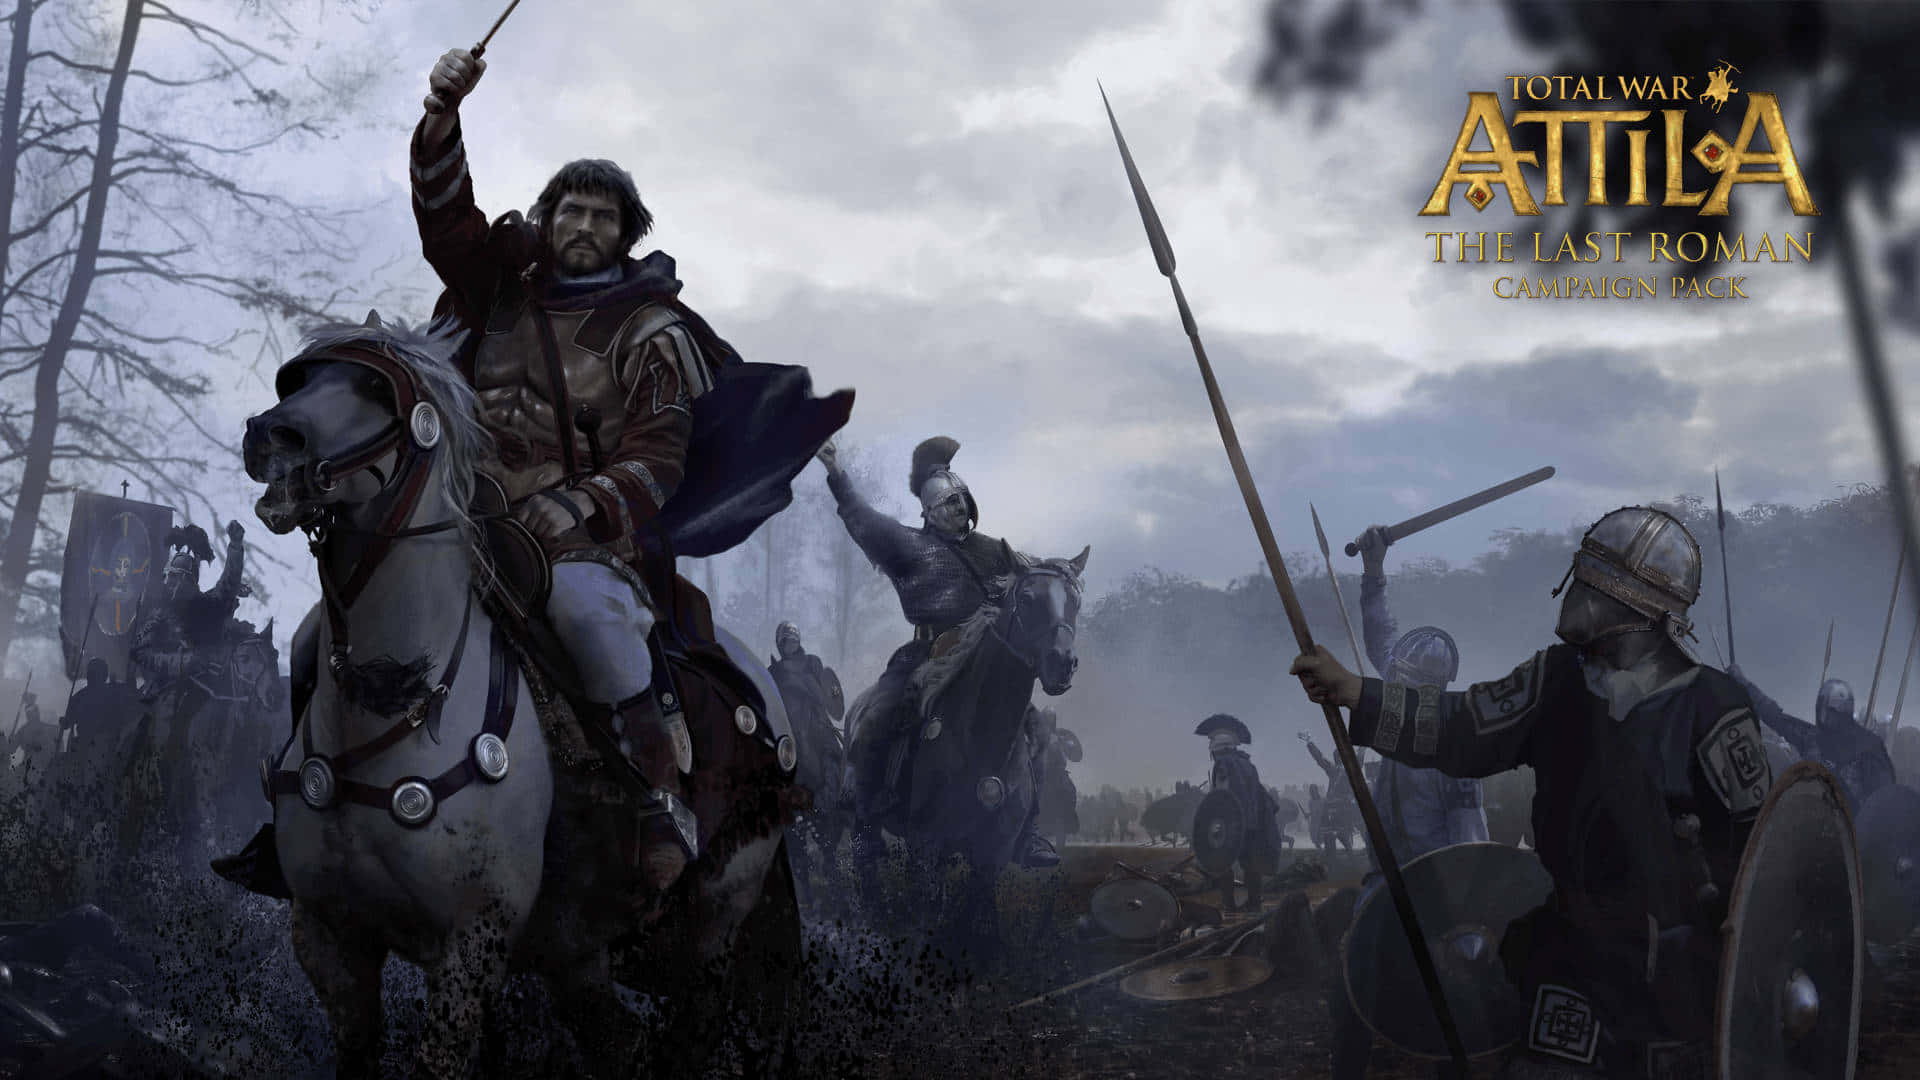 Ready to Take On the World: HD Total War Attila